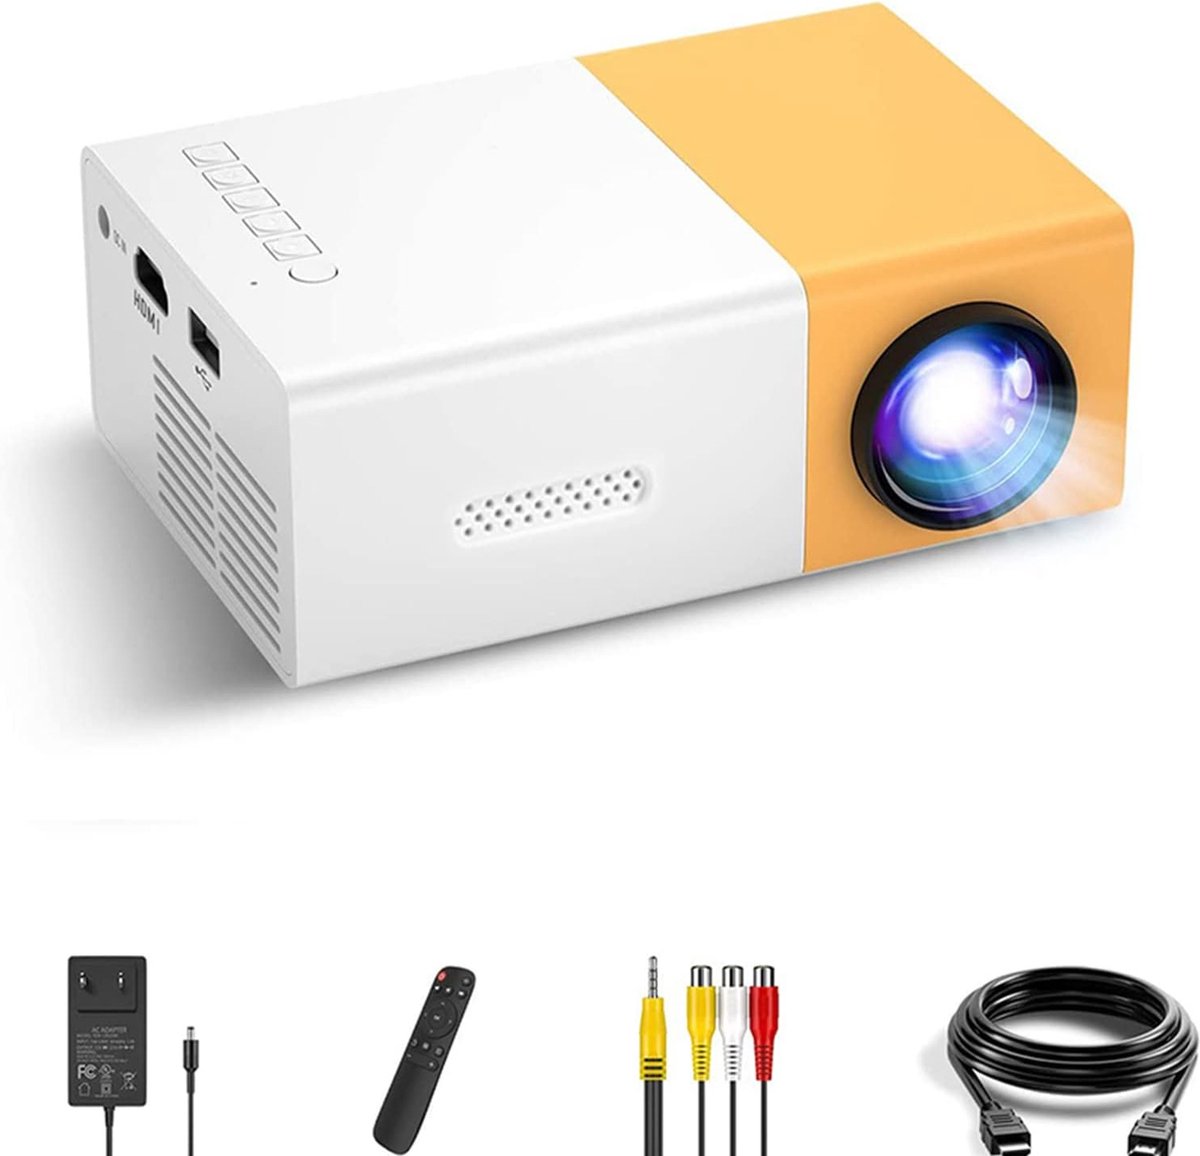 Mini Beamer - Input tot 1080P Full HD - Projector - Mini Projector - HDMI - USB - Wit / geel - Smartphone - Draagbaar - Ingebouwde speaker